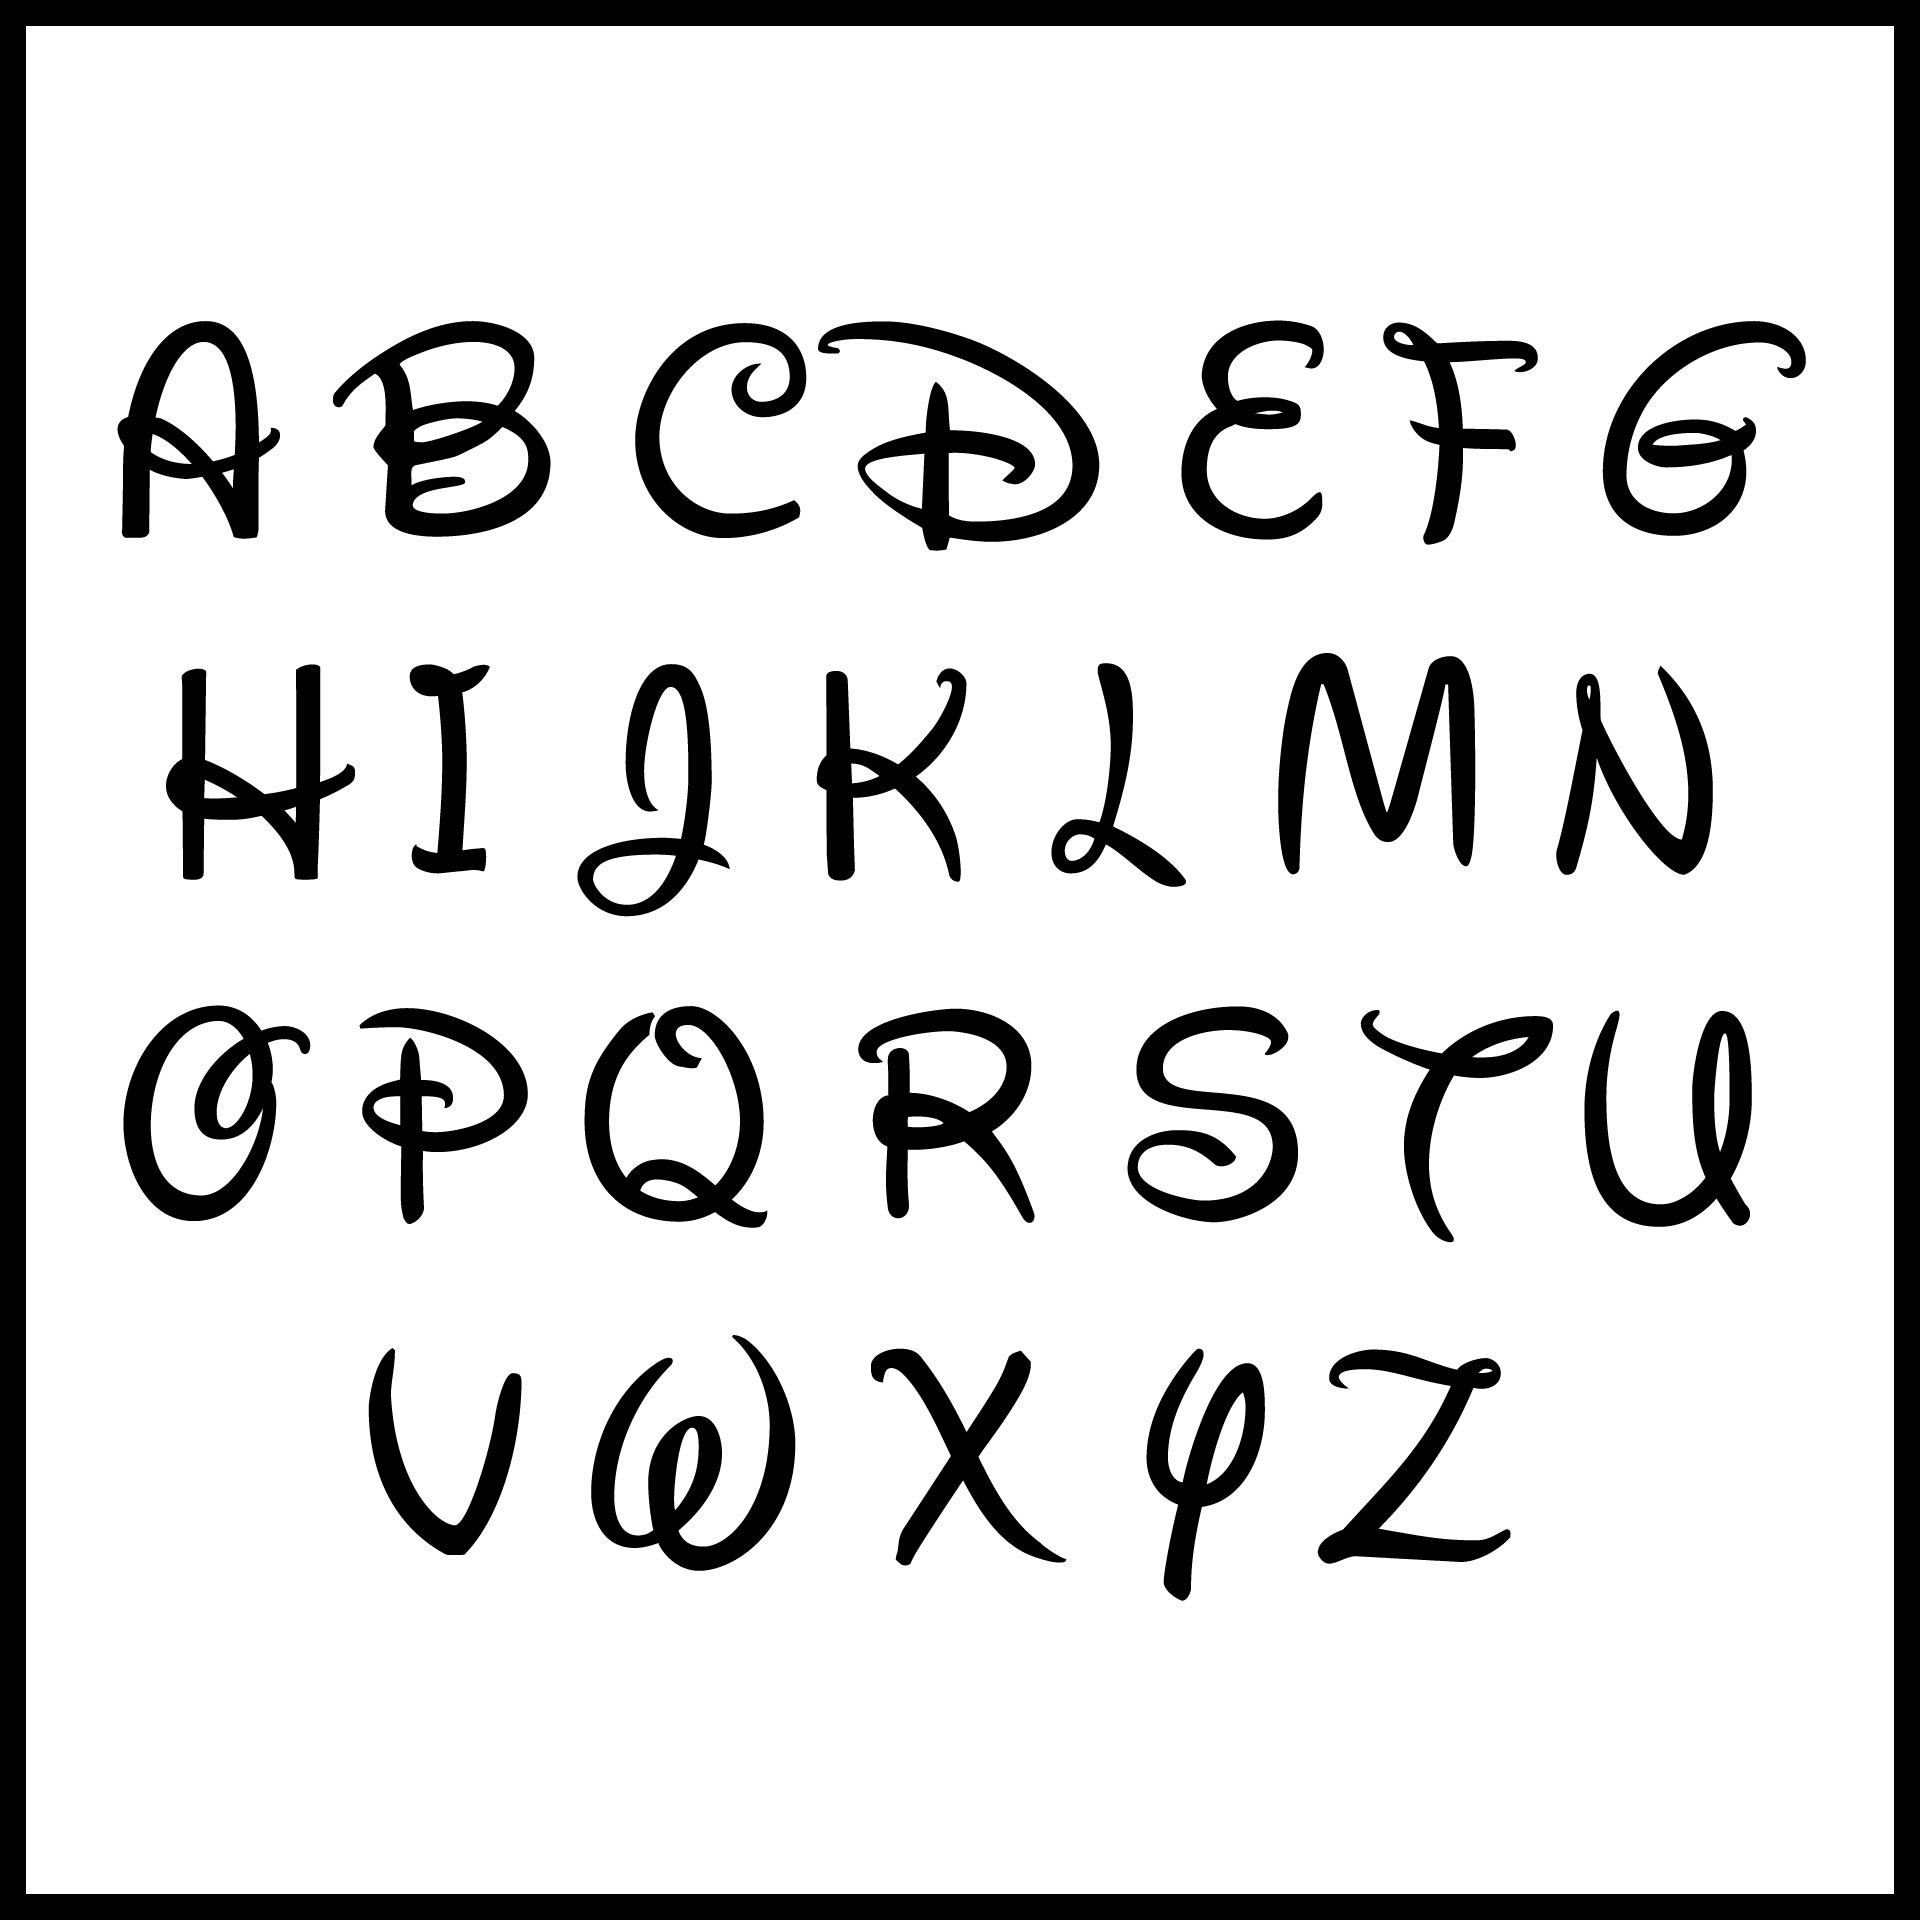 Free Printable Disney Alphabet Letters